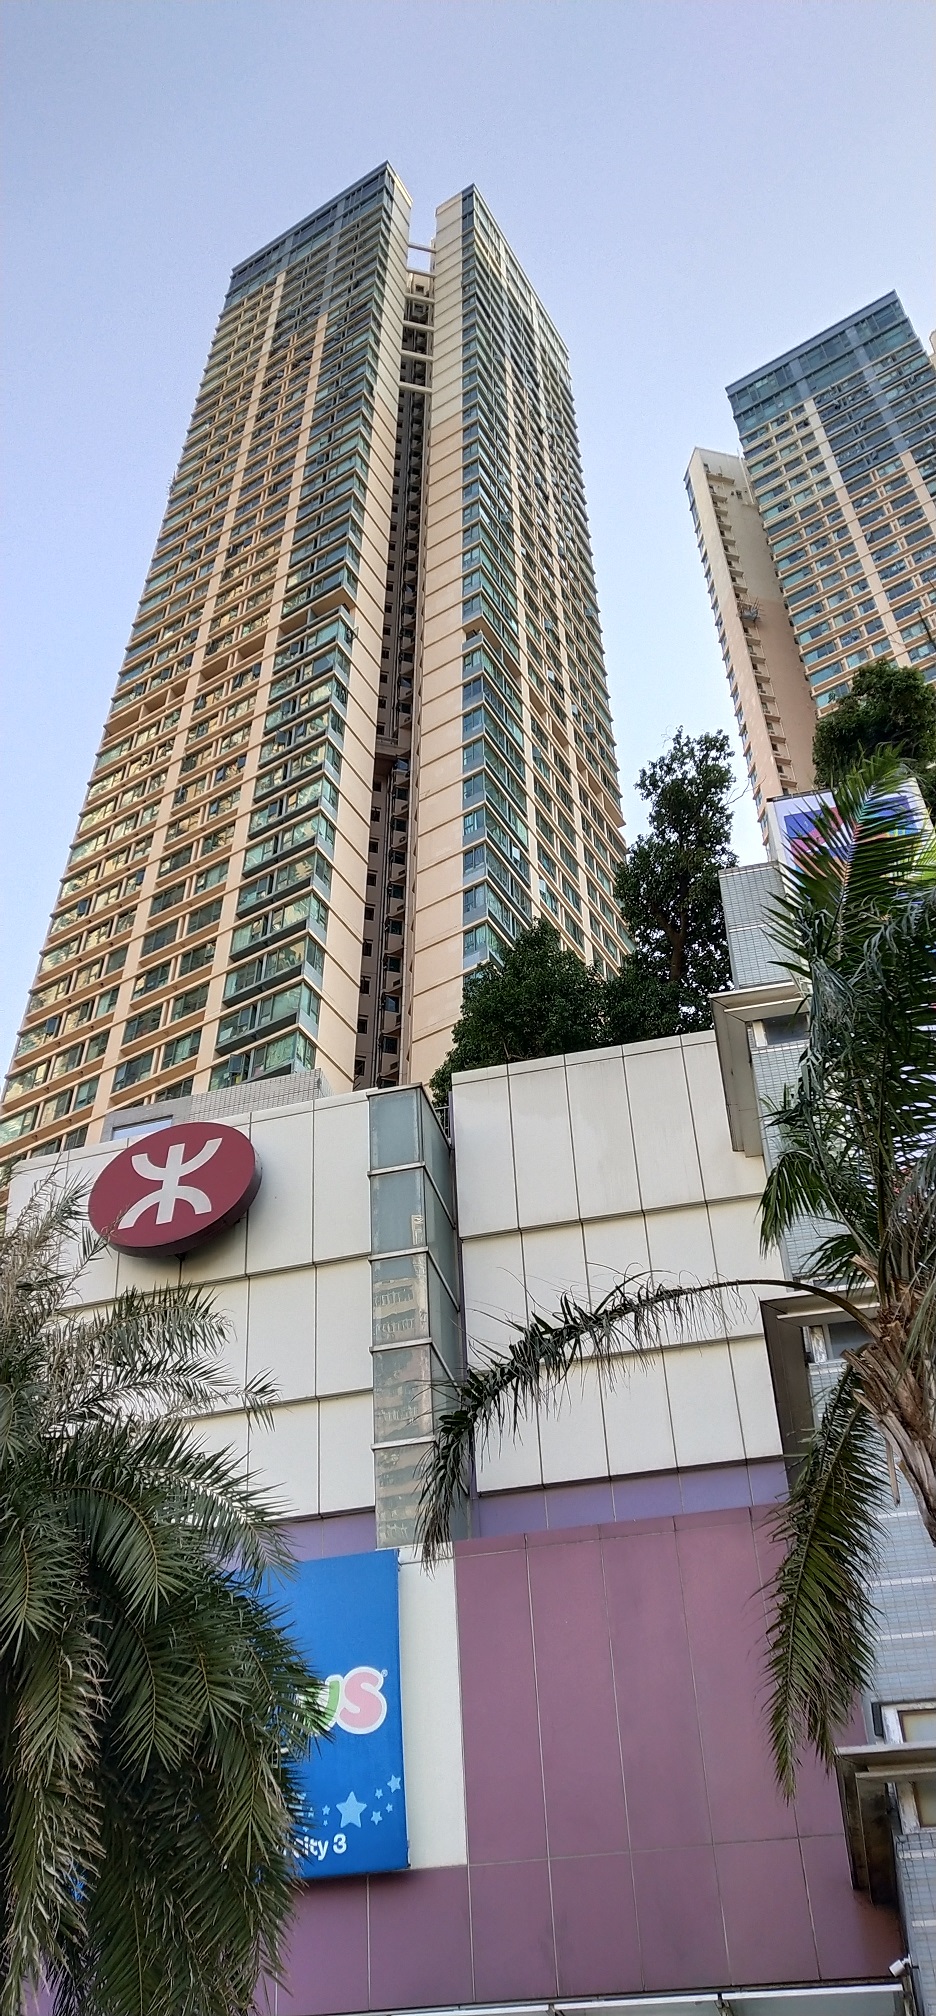 Hong Kong Metro company earns a lot of money from property developments.